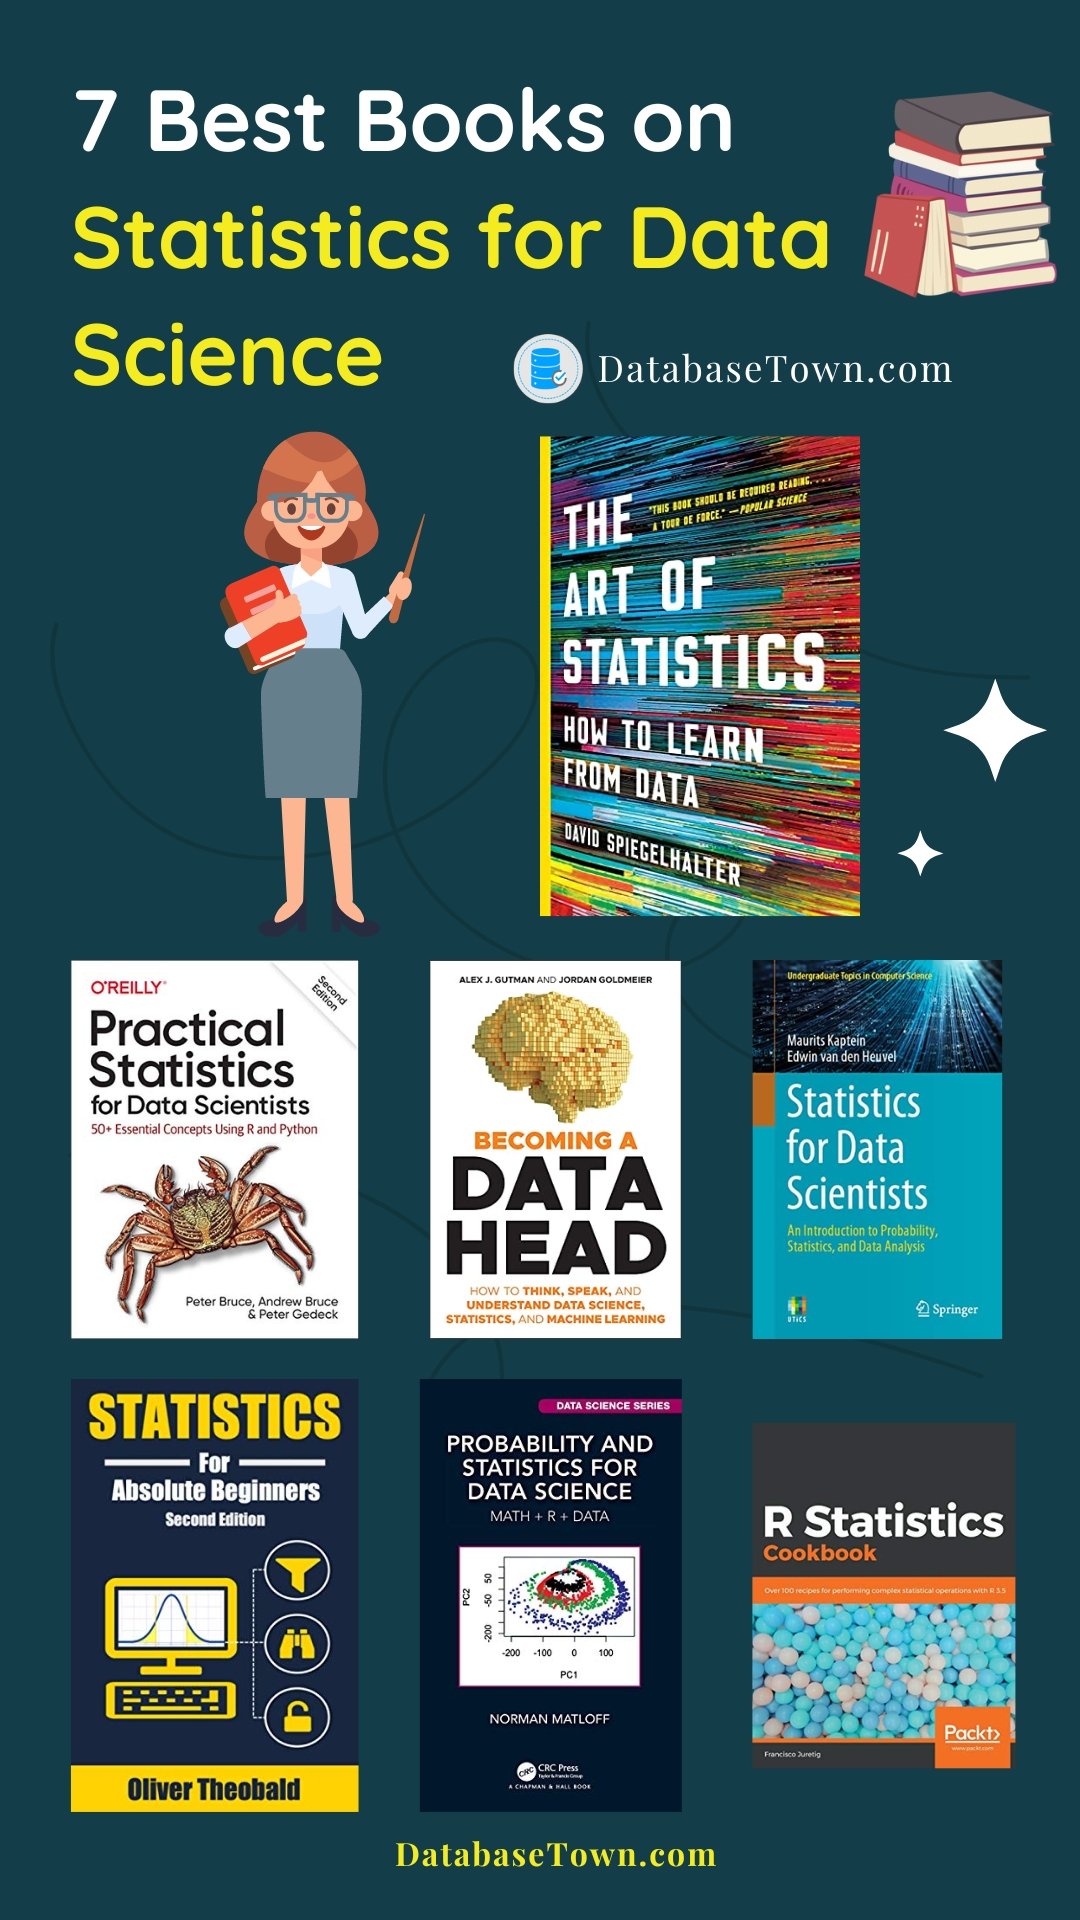 7 Best Books on Statistics for Data Science